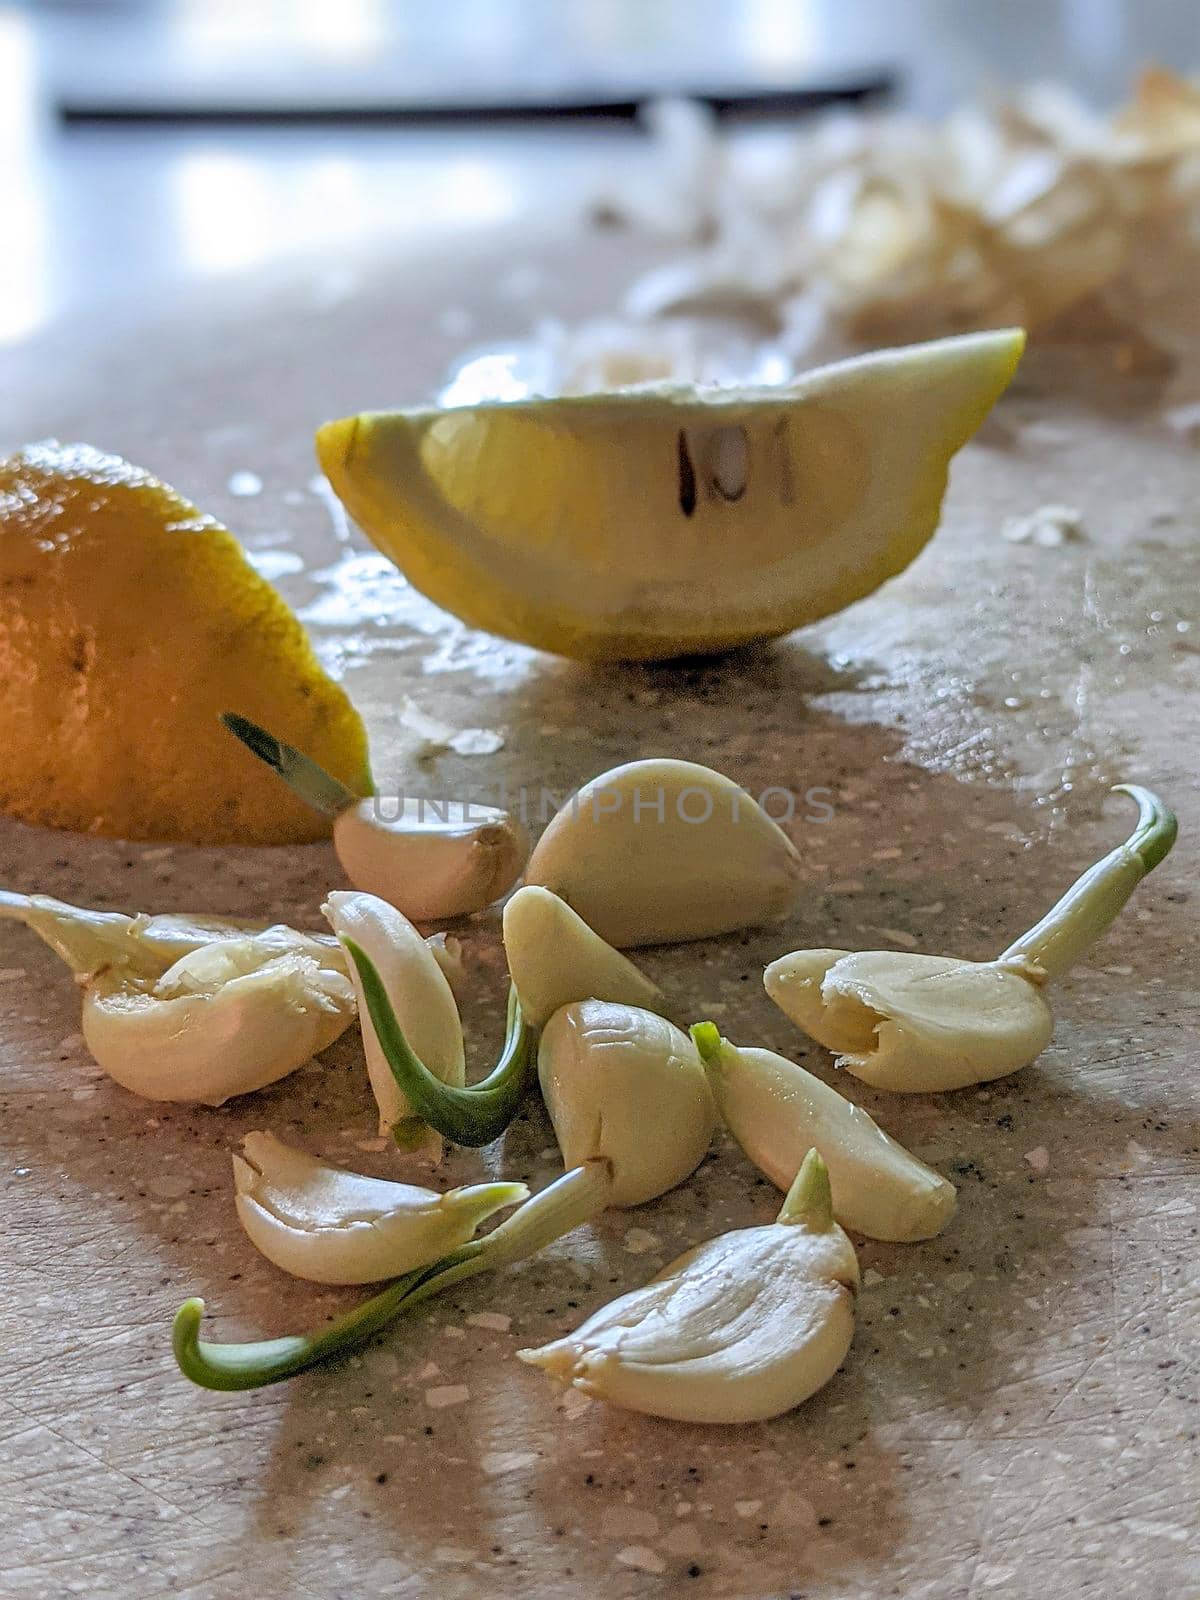 garlic and lemon lime on cutting board by digidreamgrafix